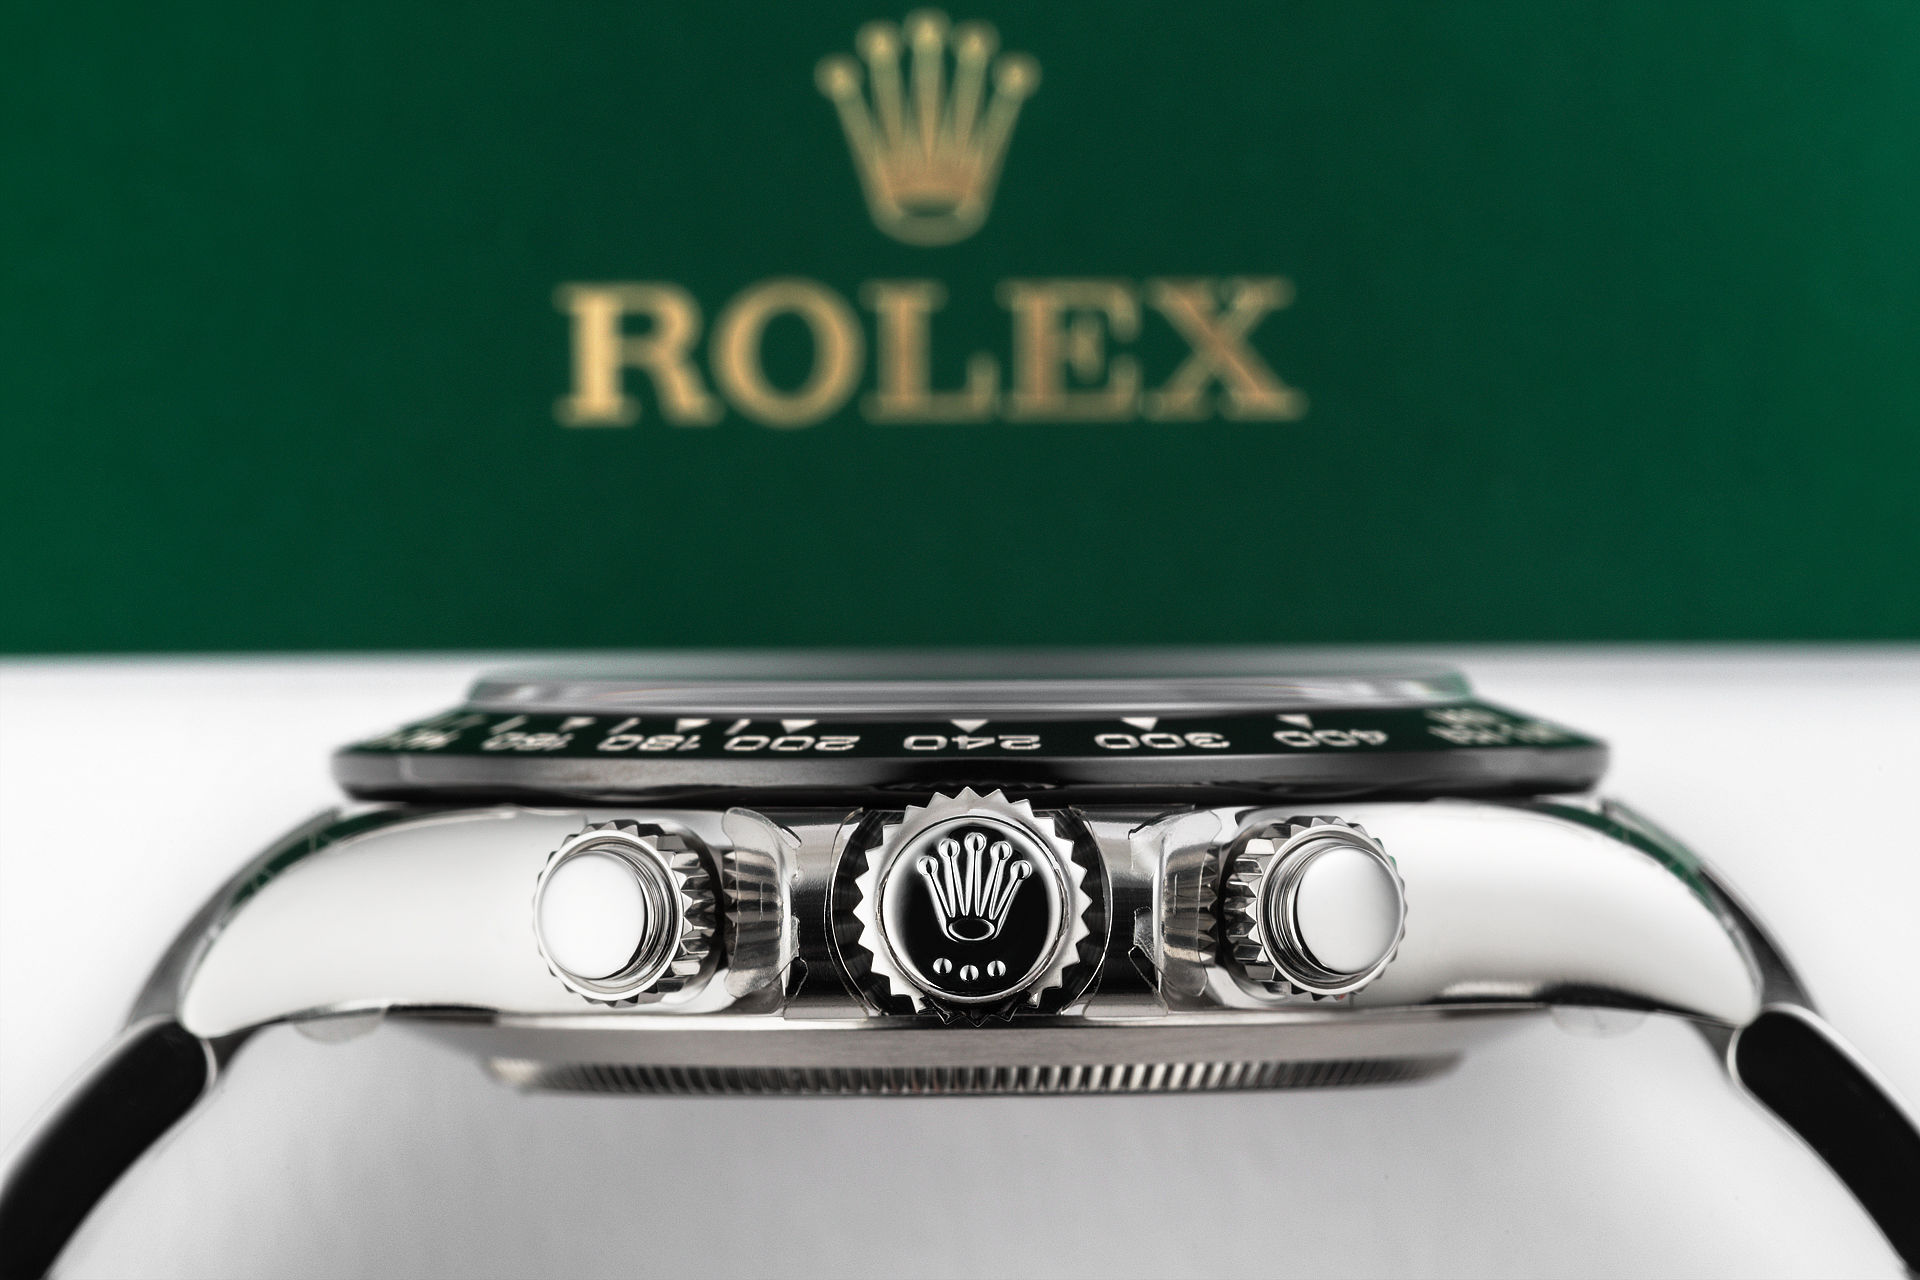 ref 116500LN | Fully Stickered 5 year Warranty | Rolex Cosmograph Daytona